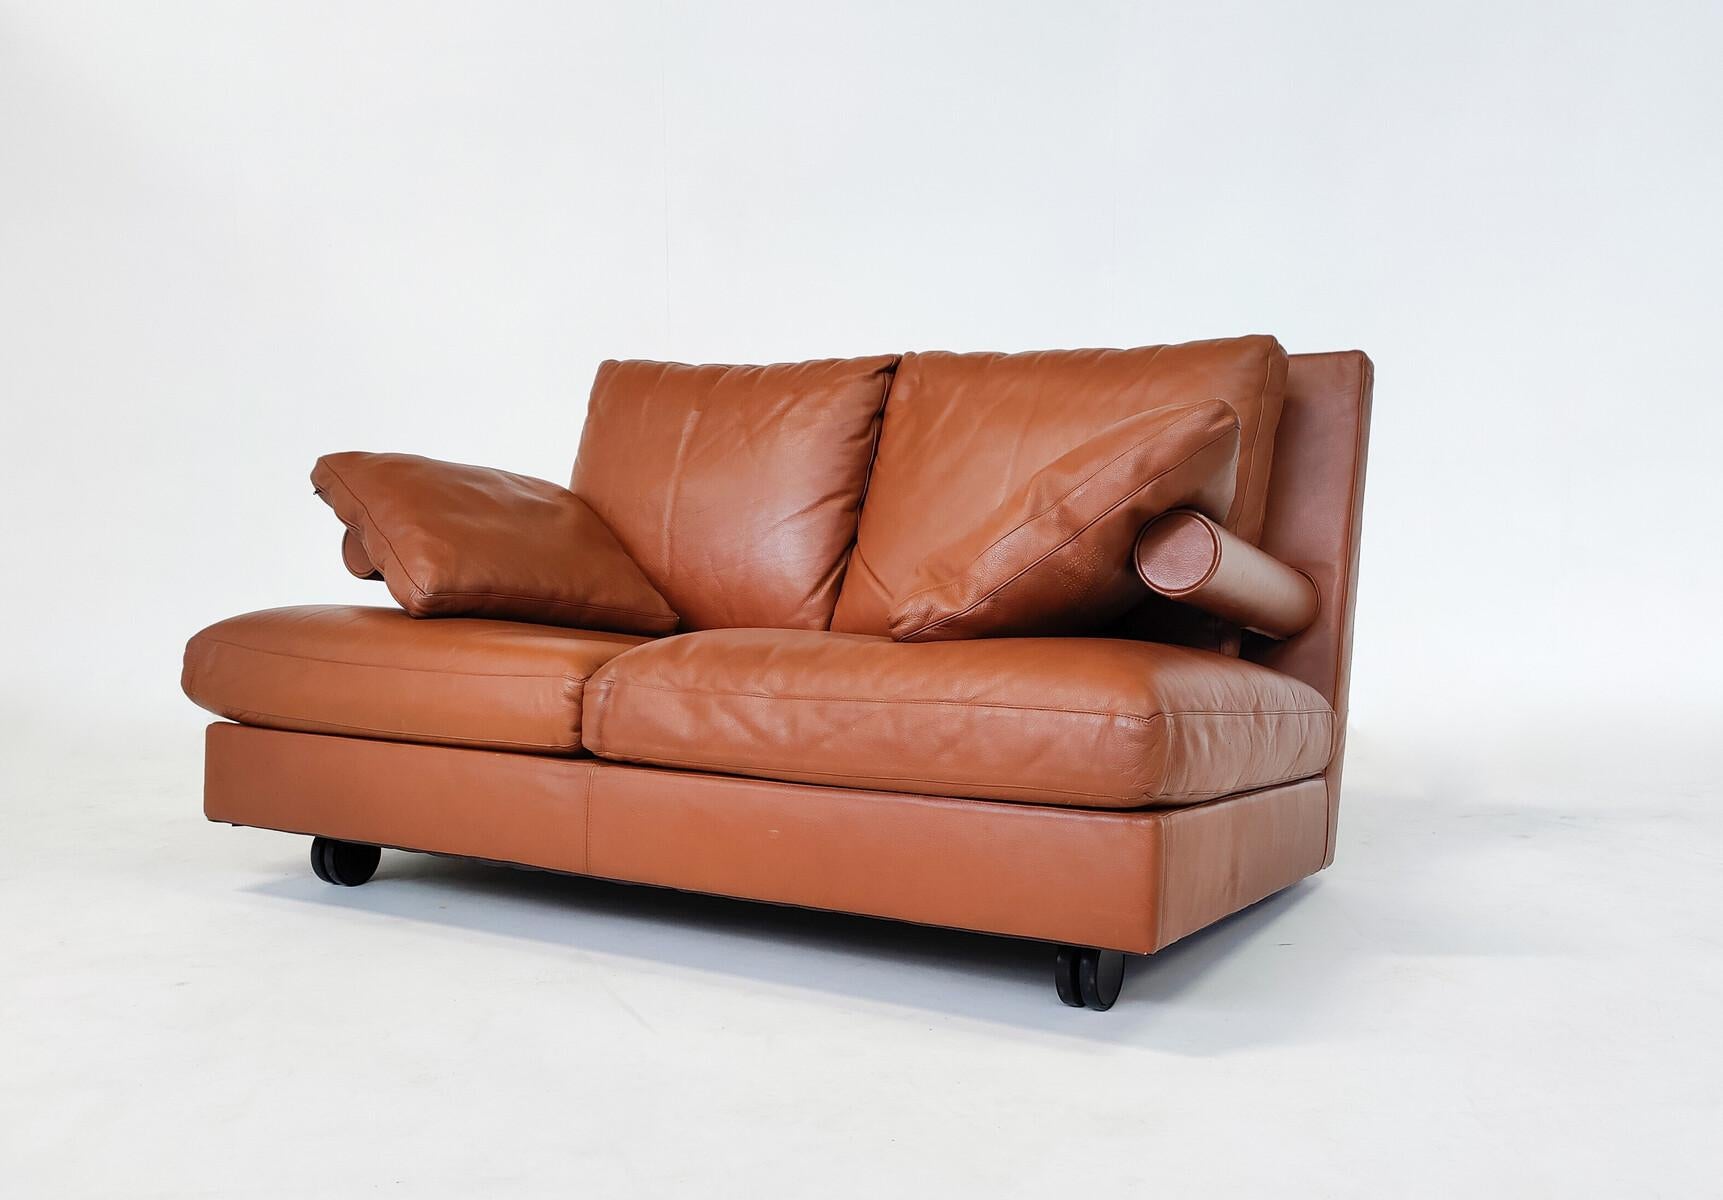 Mid-Century Modern Baisity two seater sofa by Antonio Citterio for B&B Italia, Cognac leather, 1980s.